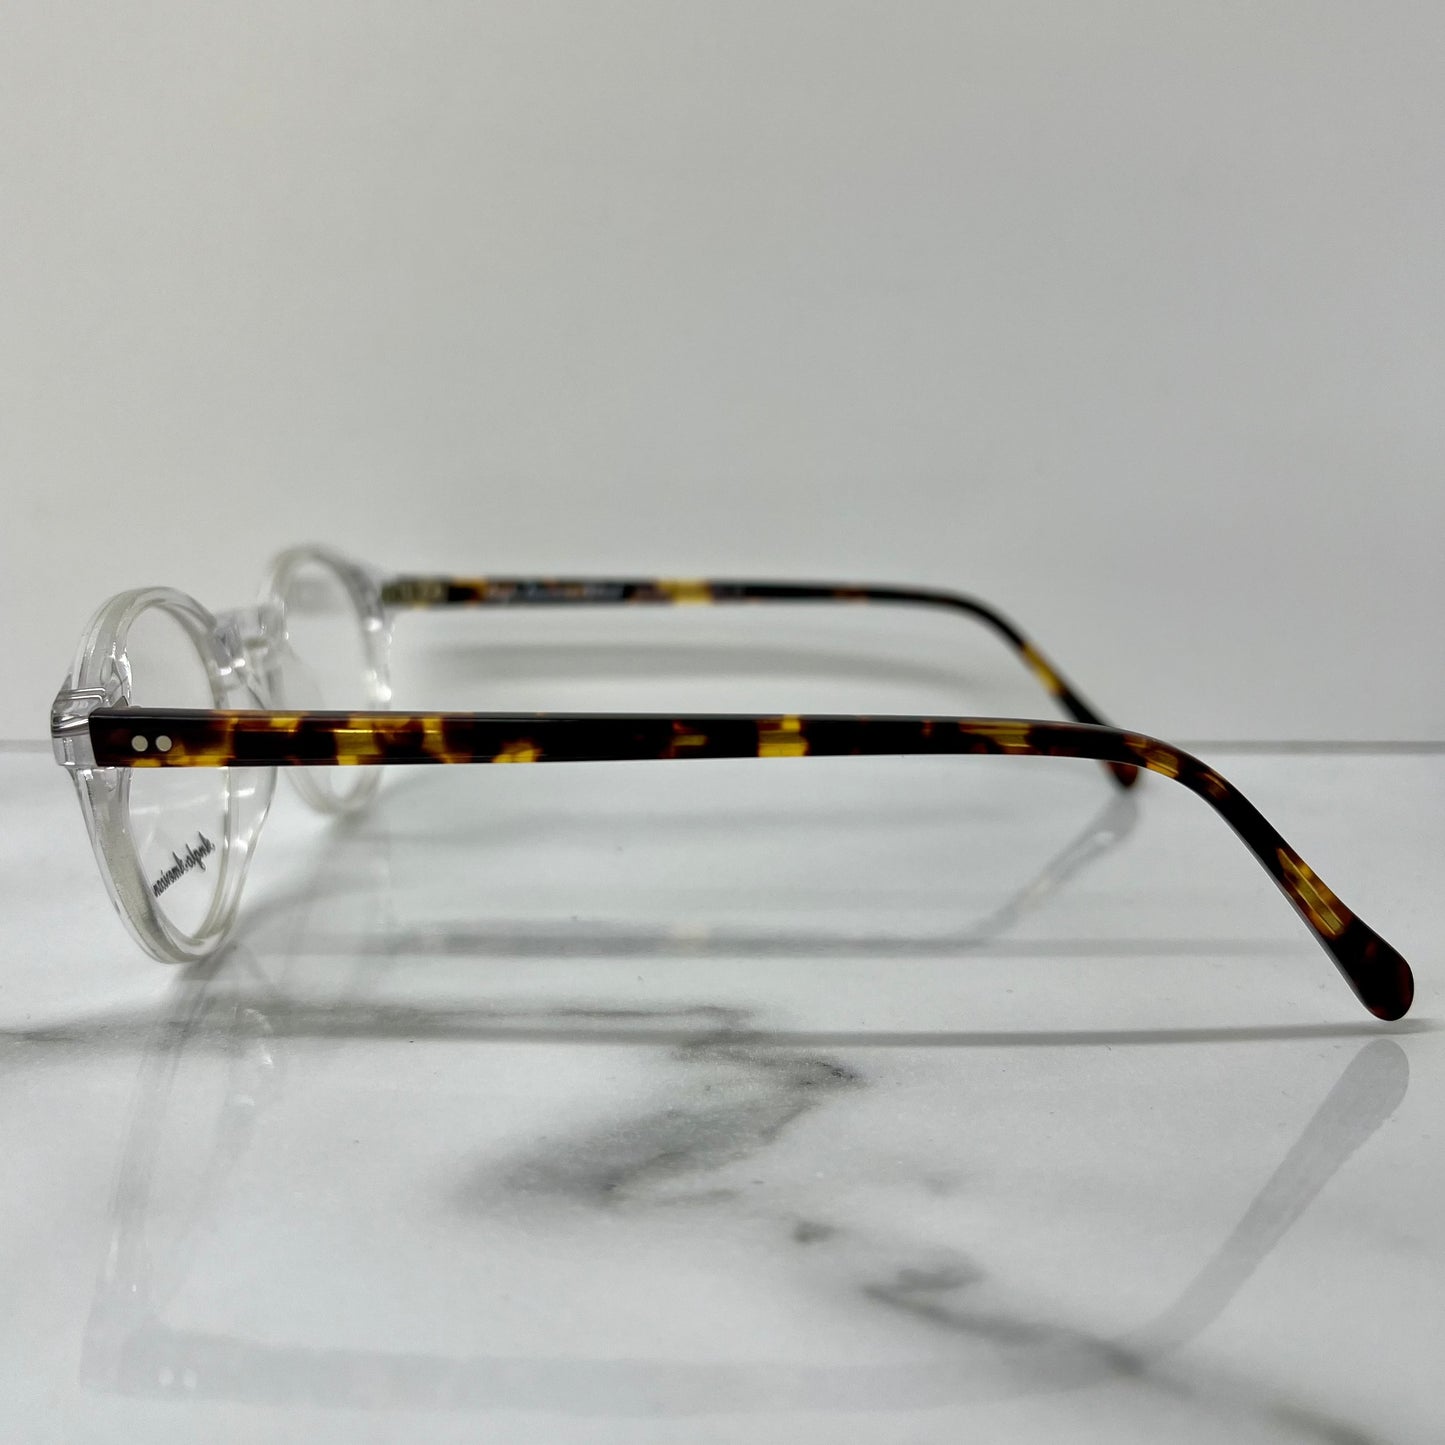 Anglo American 406 Optical Glasses Clear Tortoise Shell England Eyeglasses